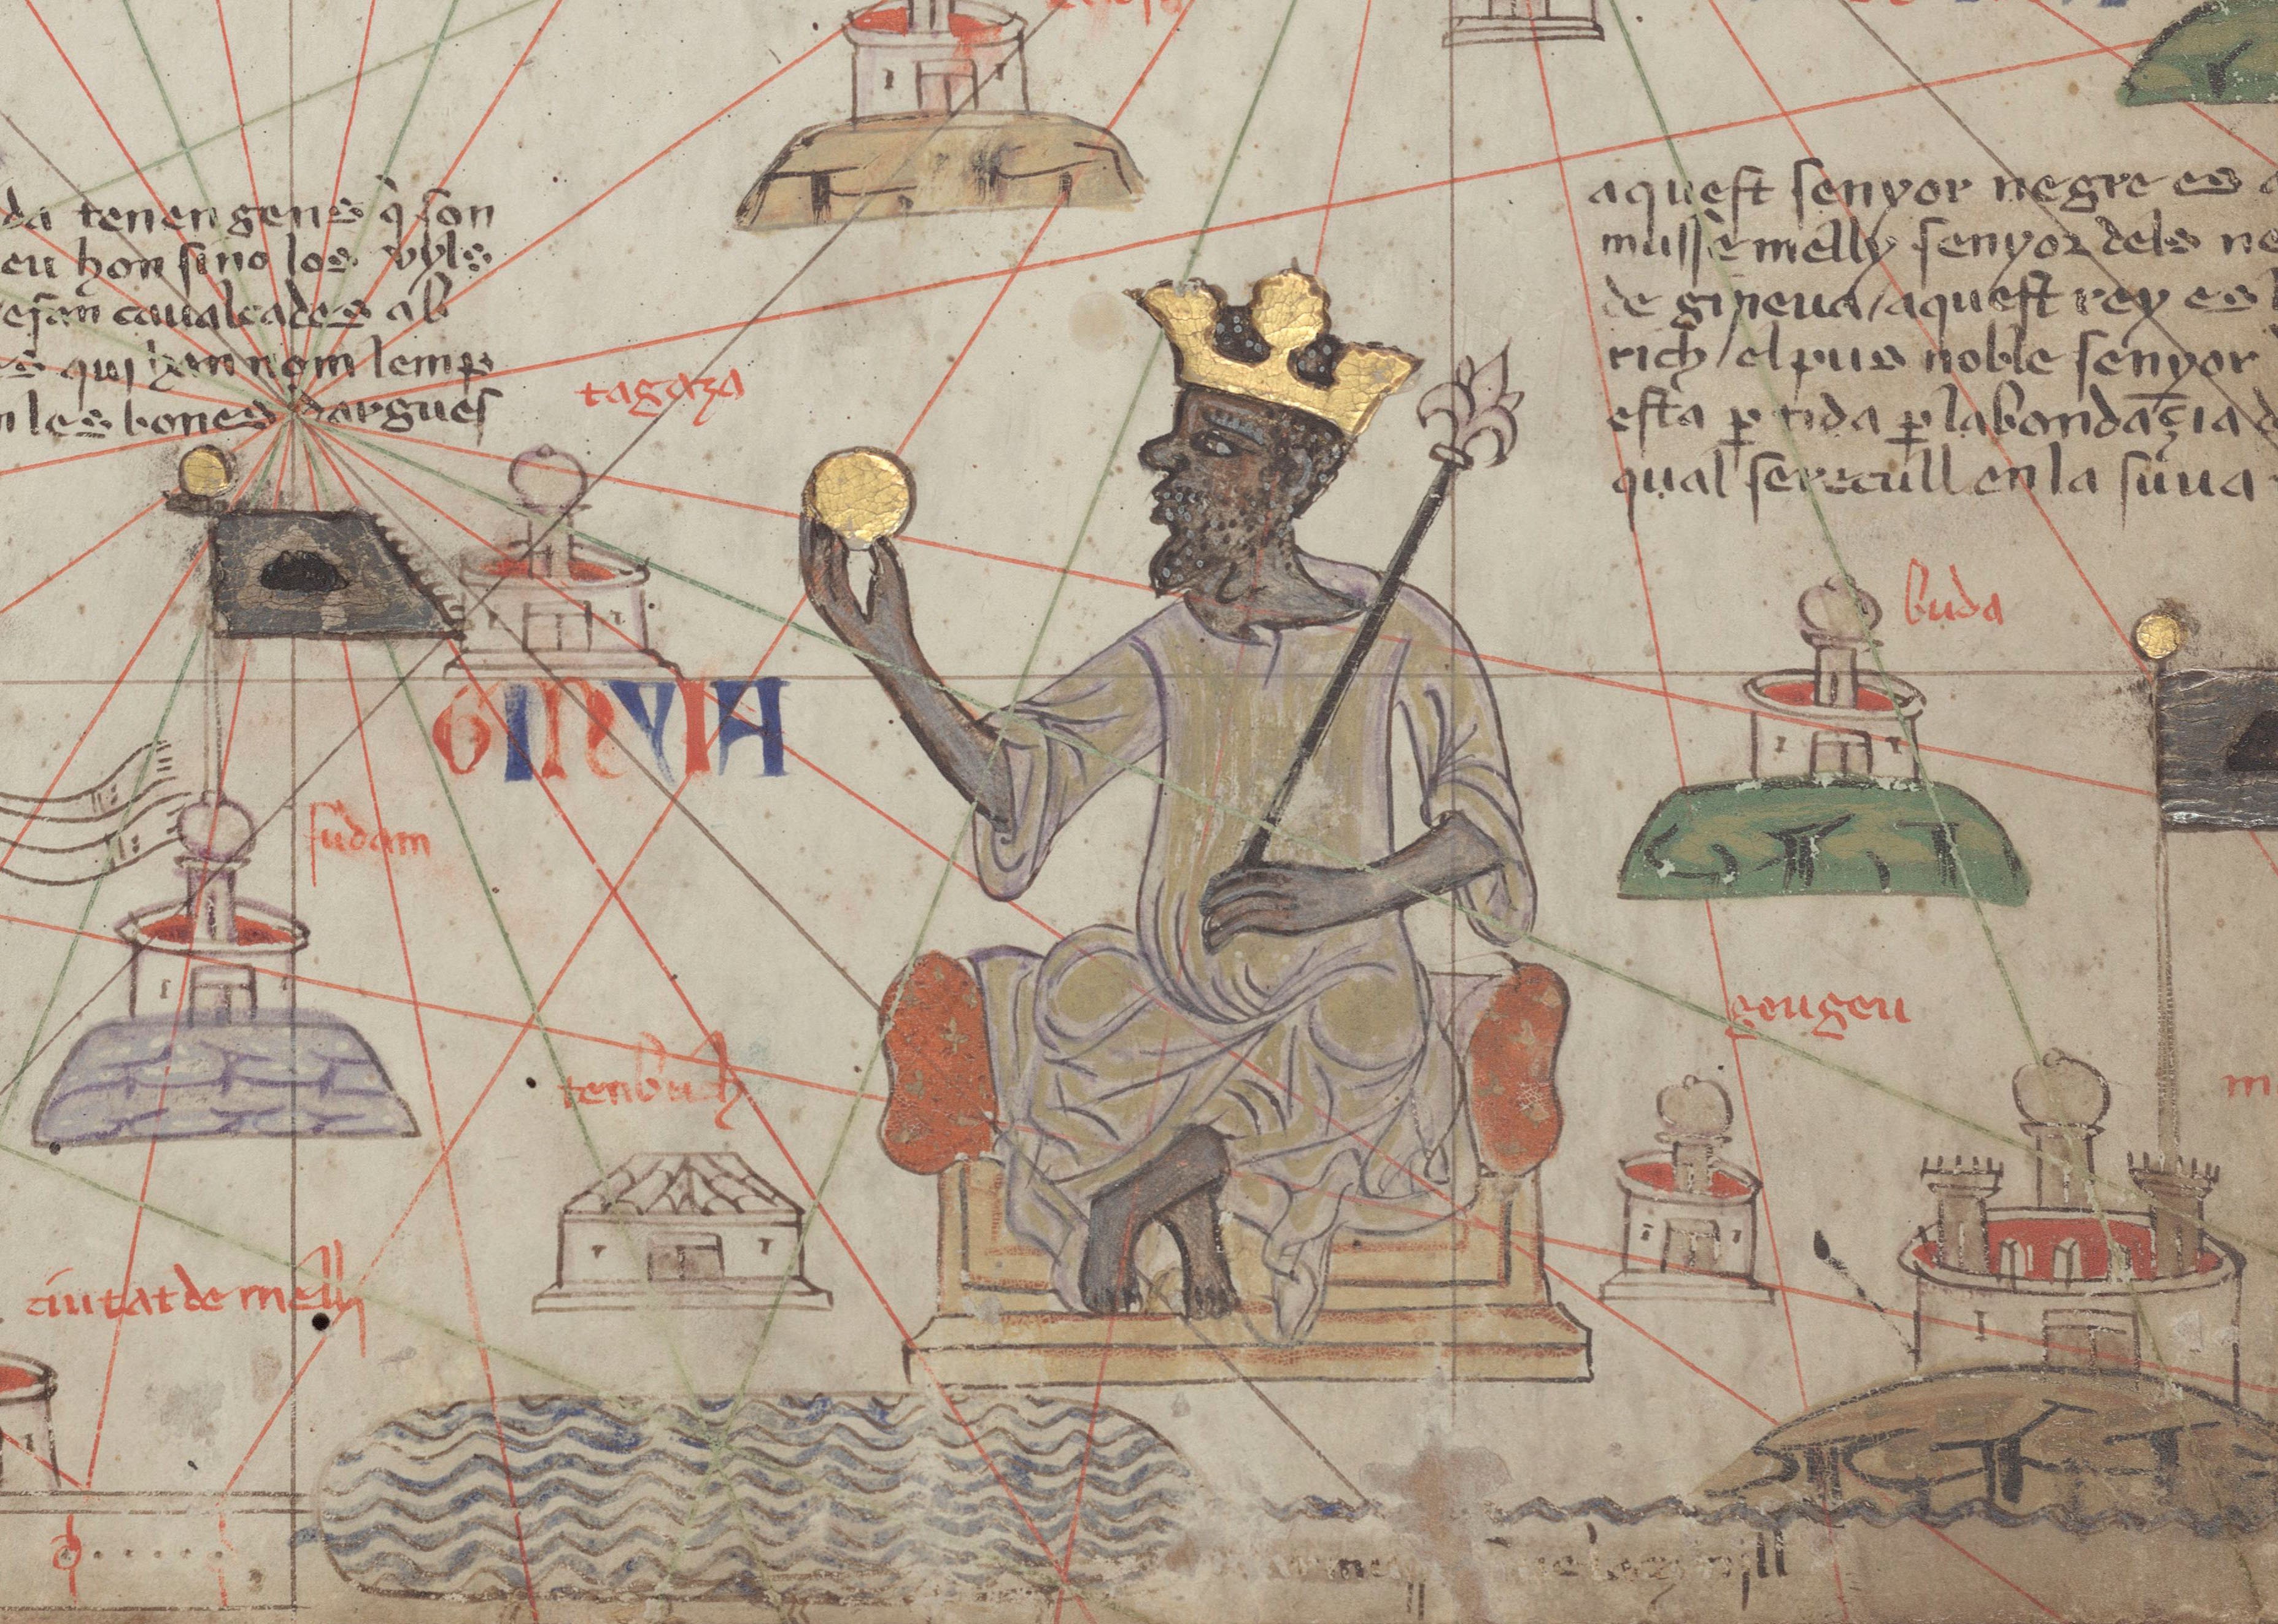 Meet Mansa Musa, Emperor of Mali - the all time richest man